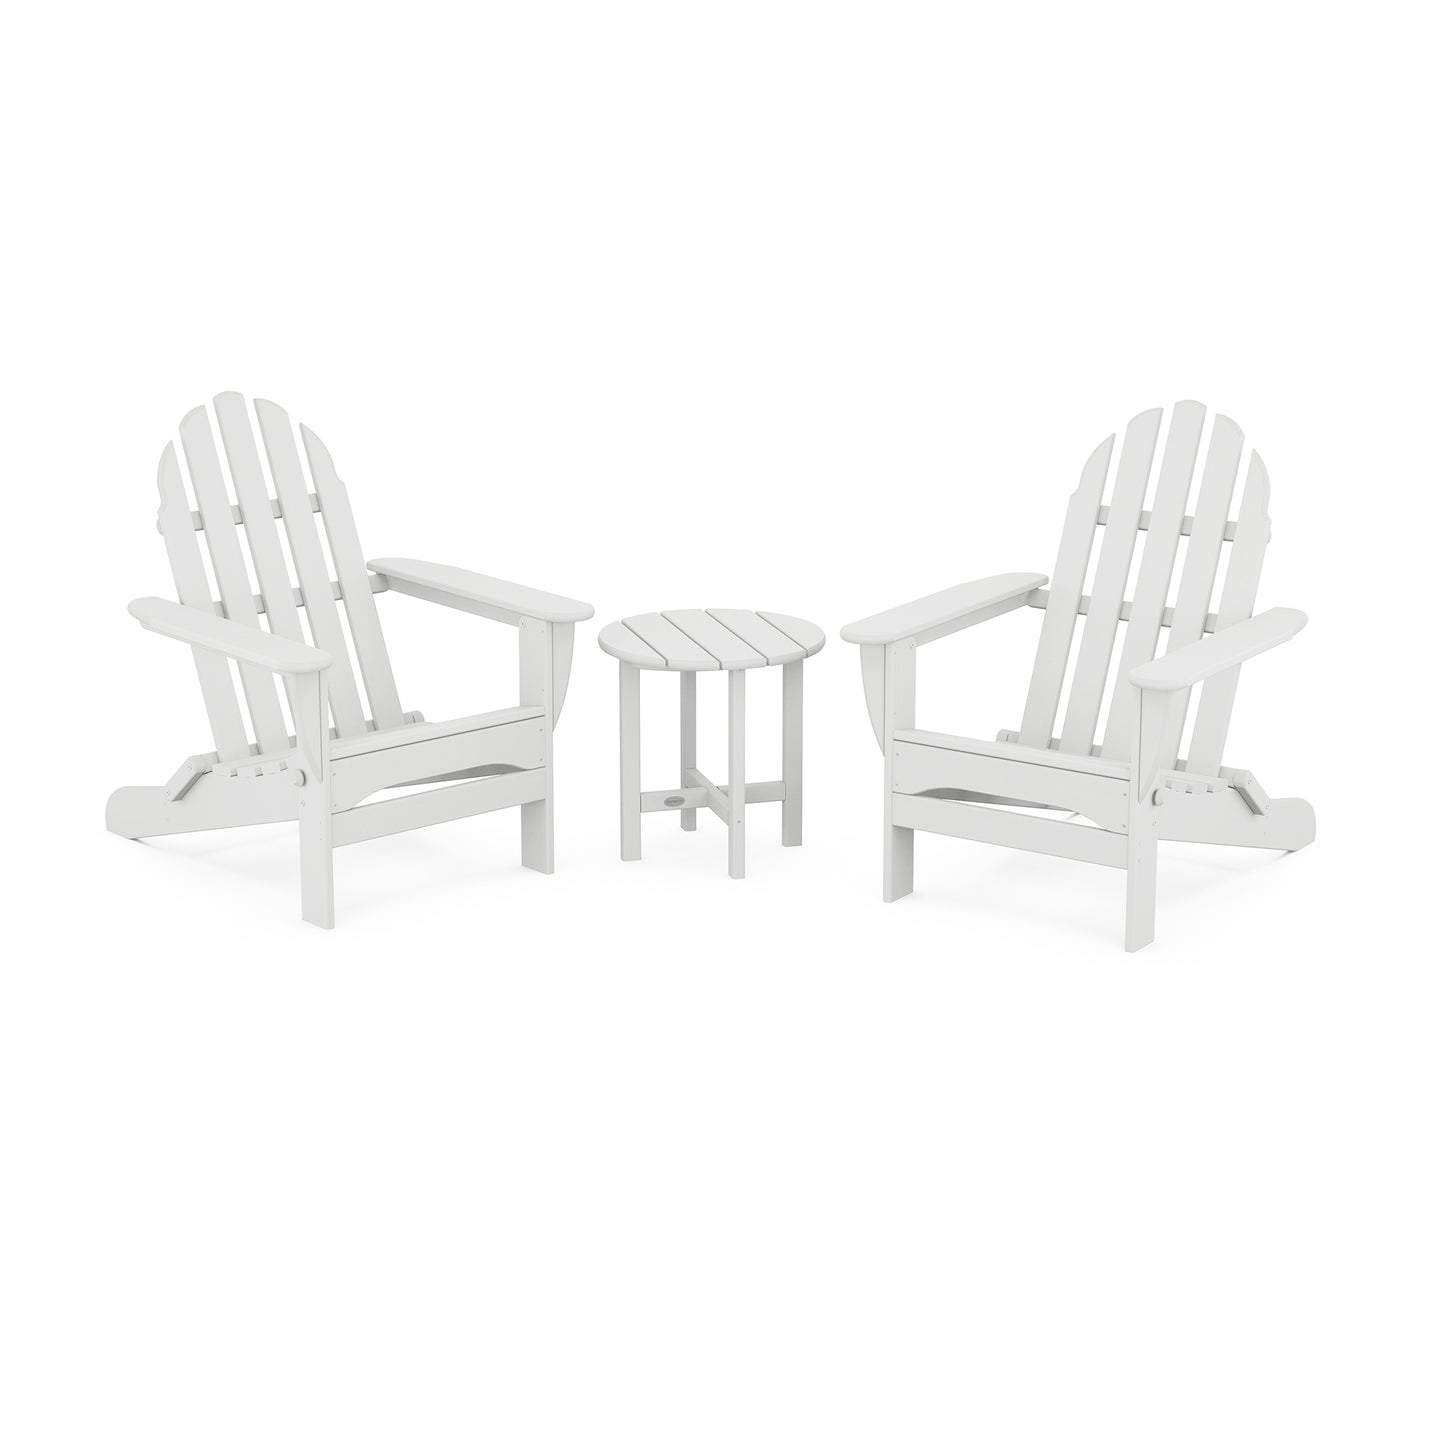 Three Classic Folding Adirondack 3-Piece Set chairs on a white background.